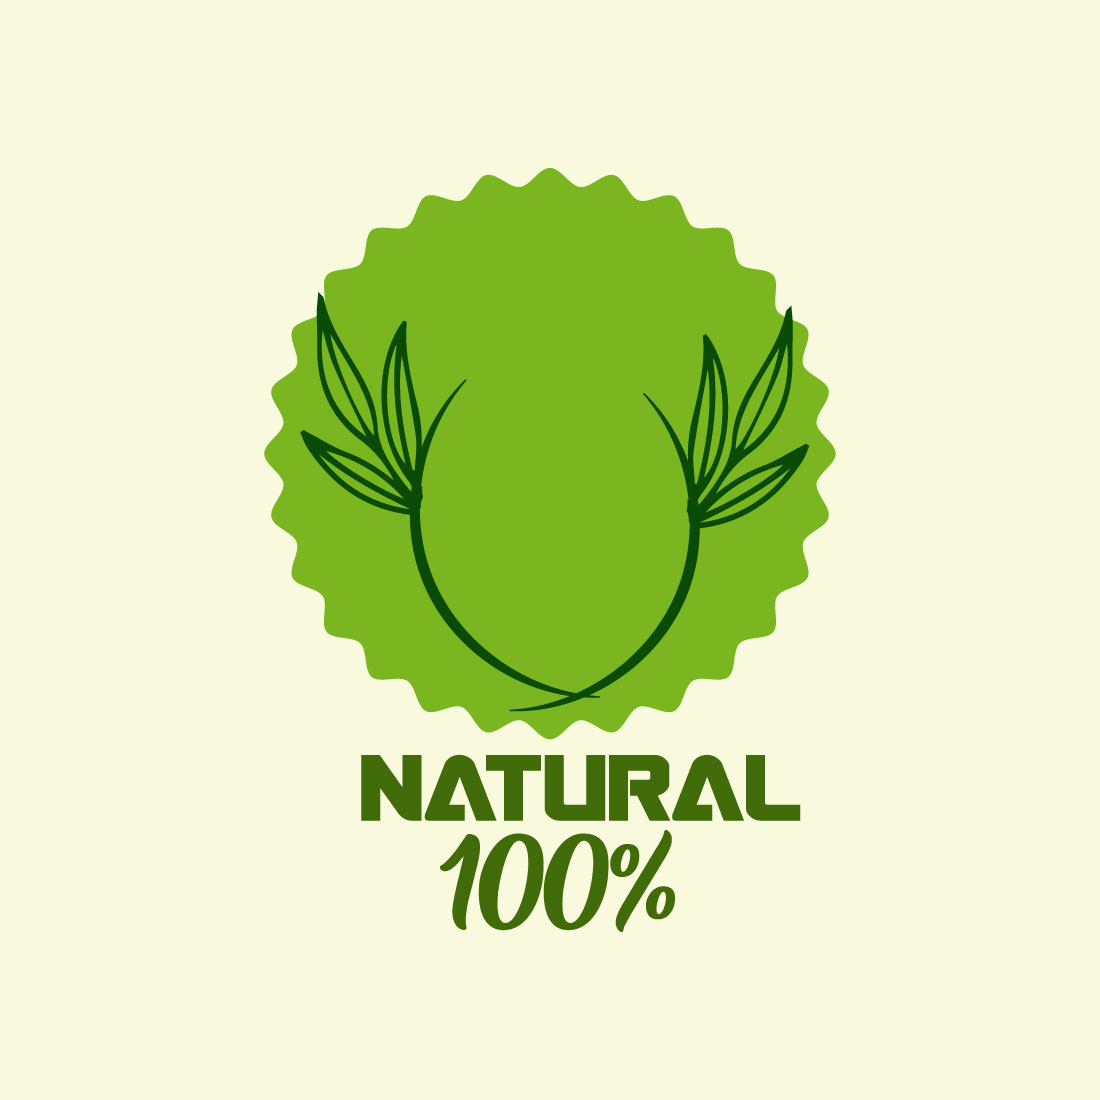 Free food leaf logo cover image.